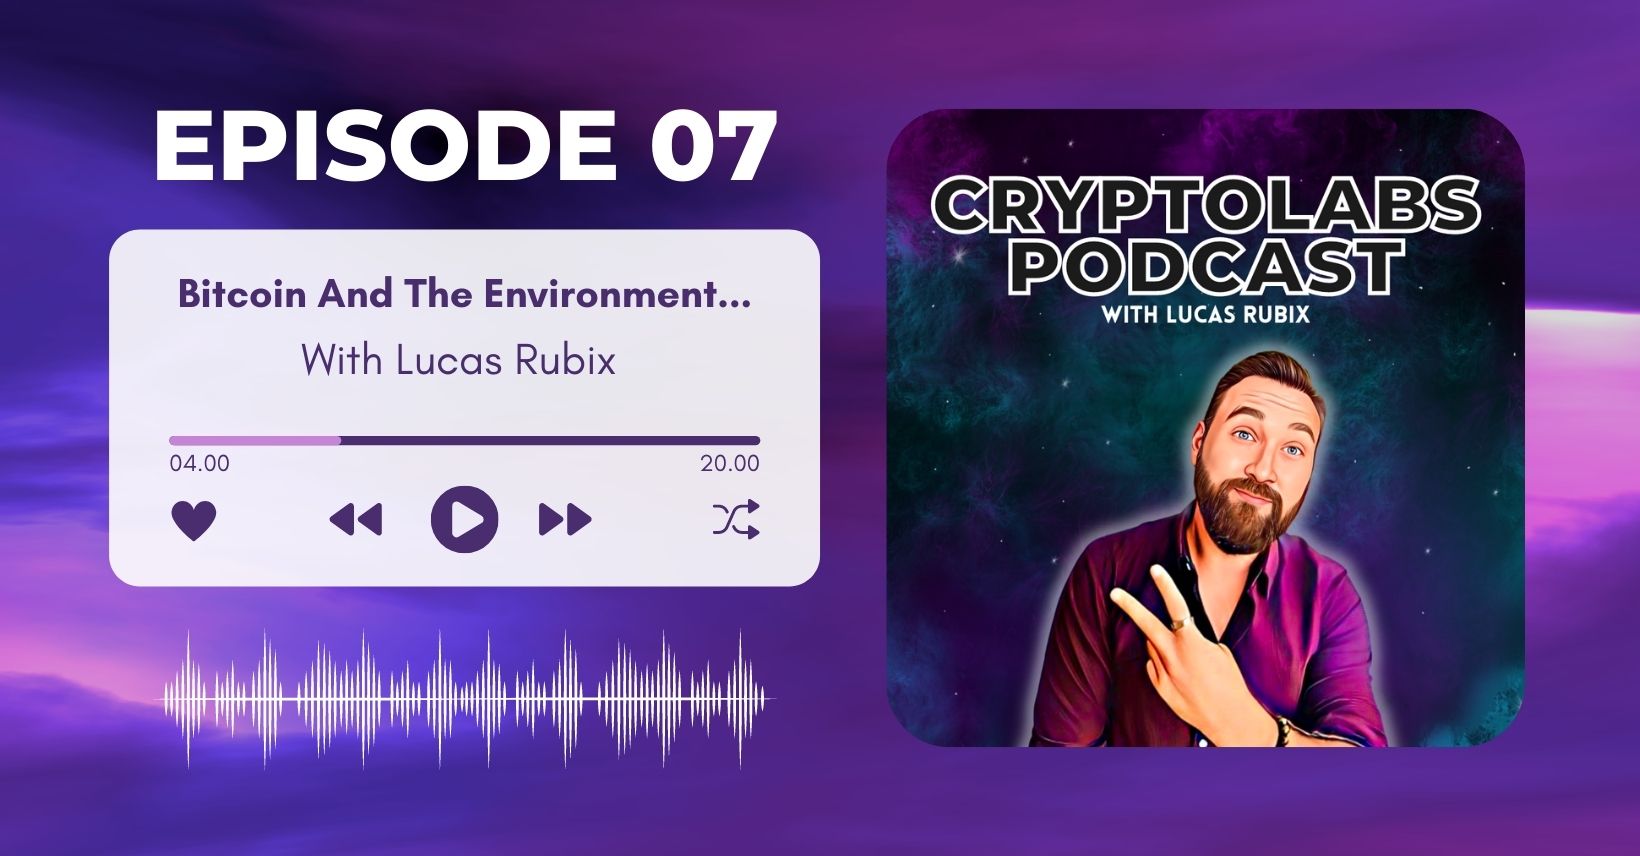 CryptoLabs Podcast epsiode 07 with Lucas Rubix